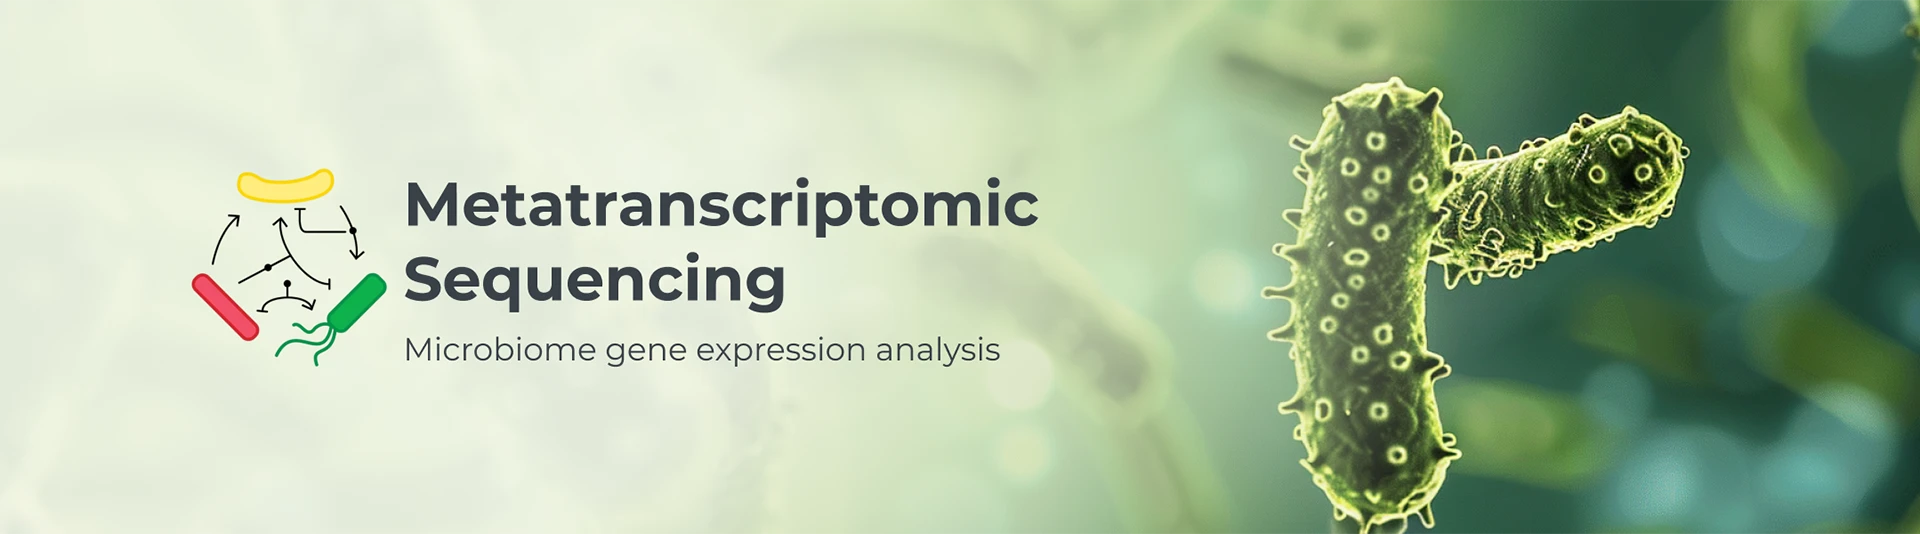 Banner for Metatranscriptomic Sequencing